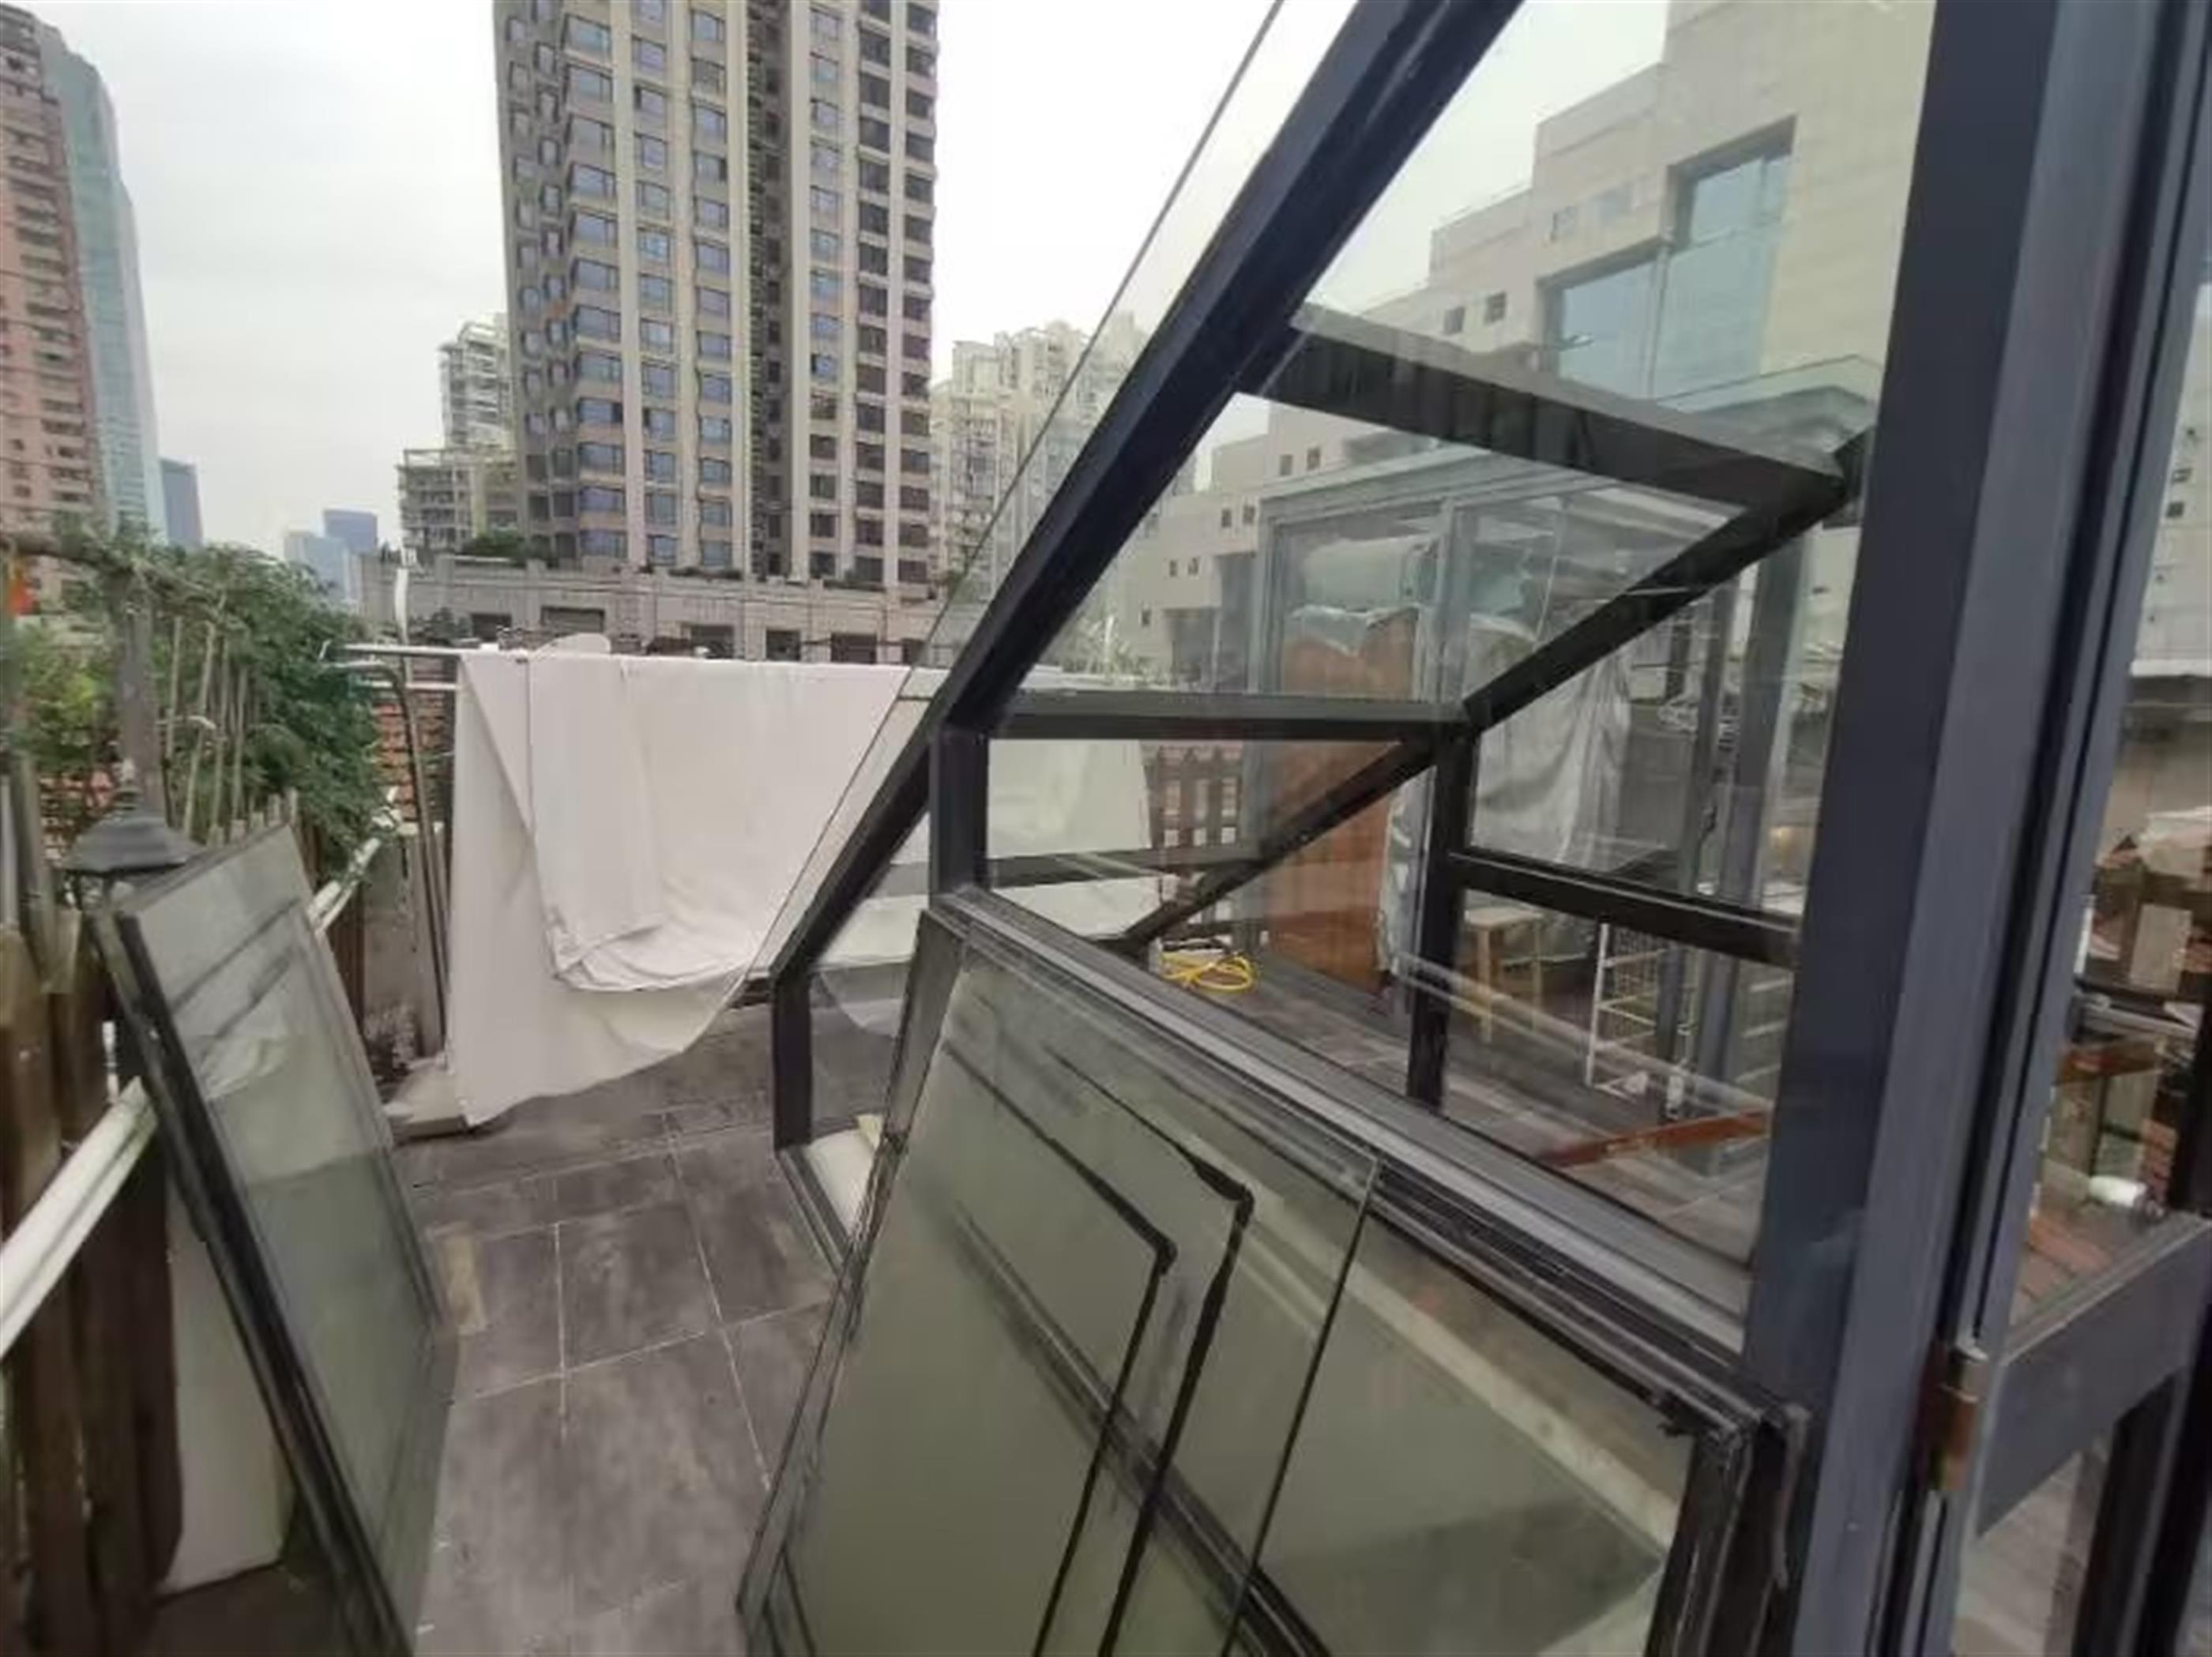 roof terrace *** For Sale *** 3-Floor 5-Room Nanjing W Rd Lane House in Shanghai